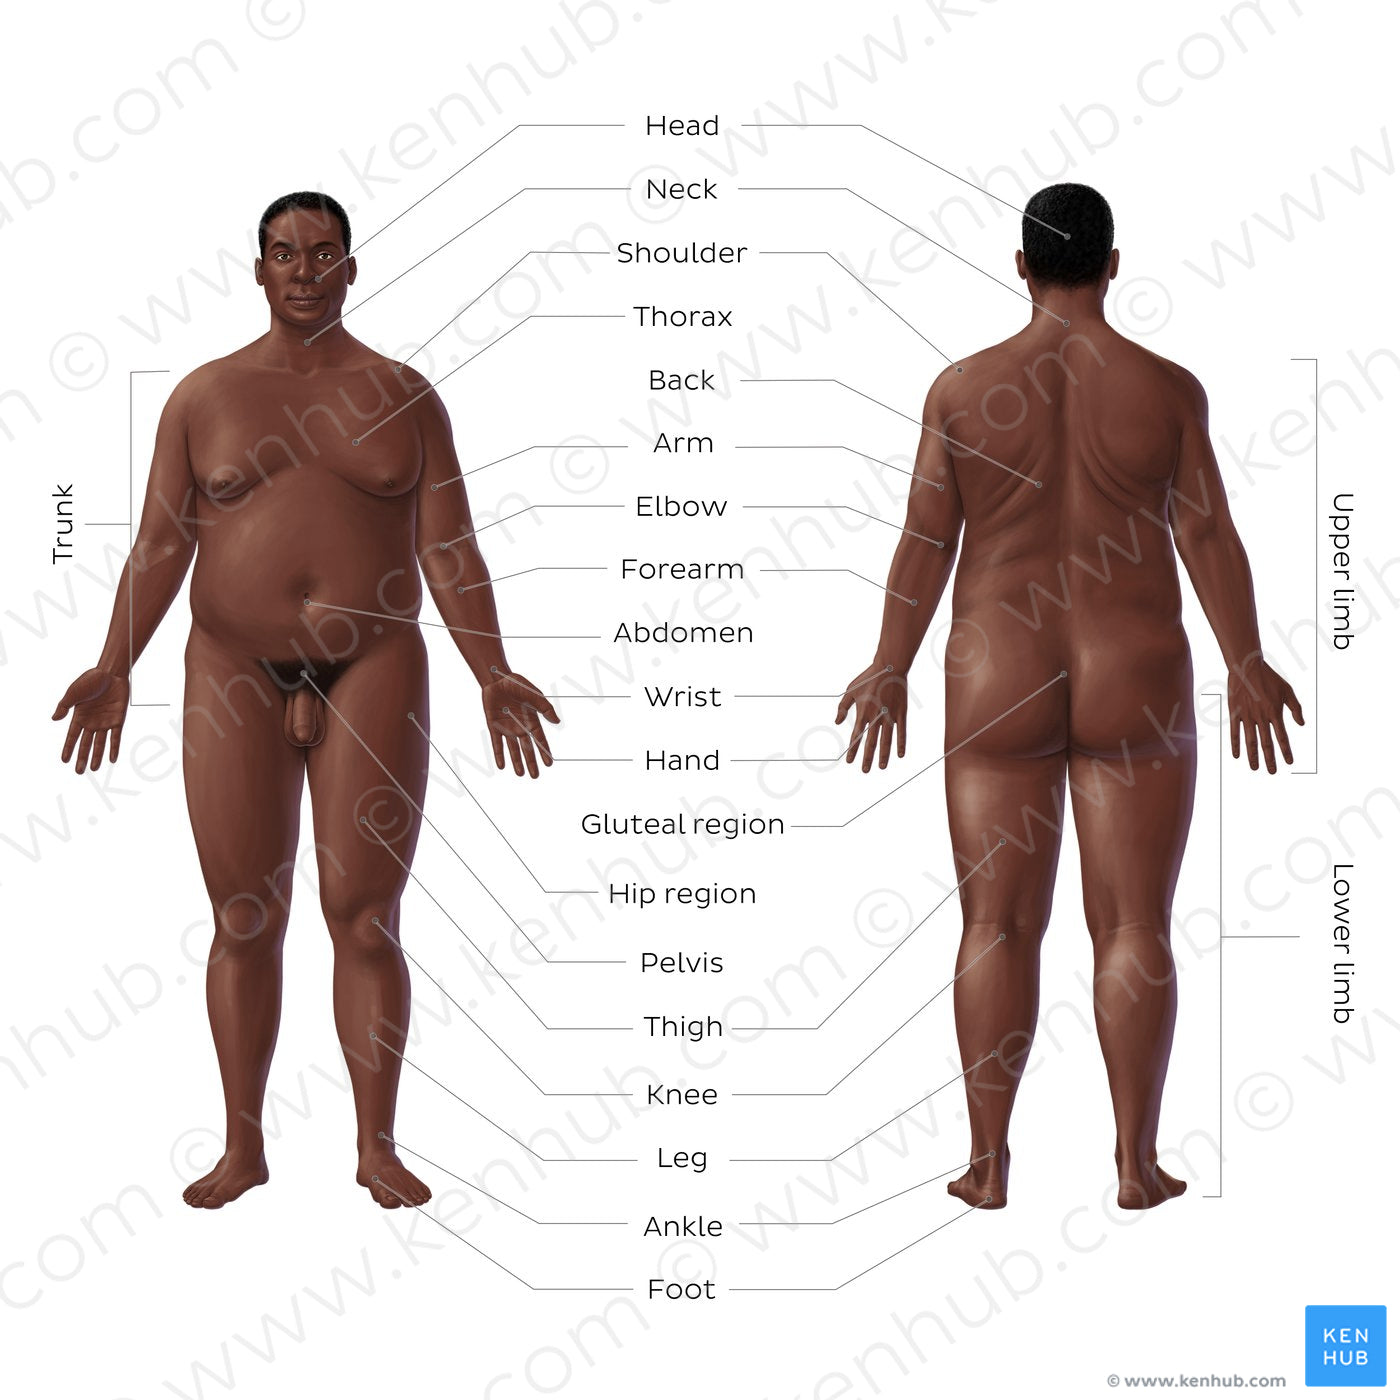 Regions of the body - Black male (English)